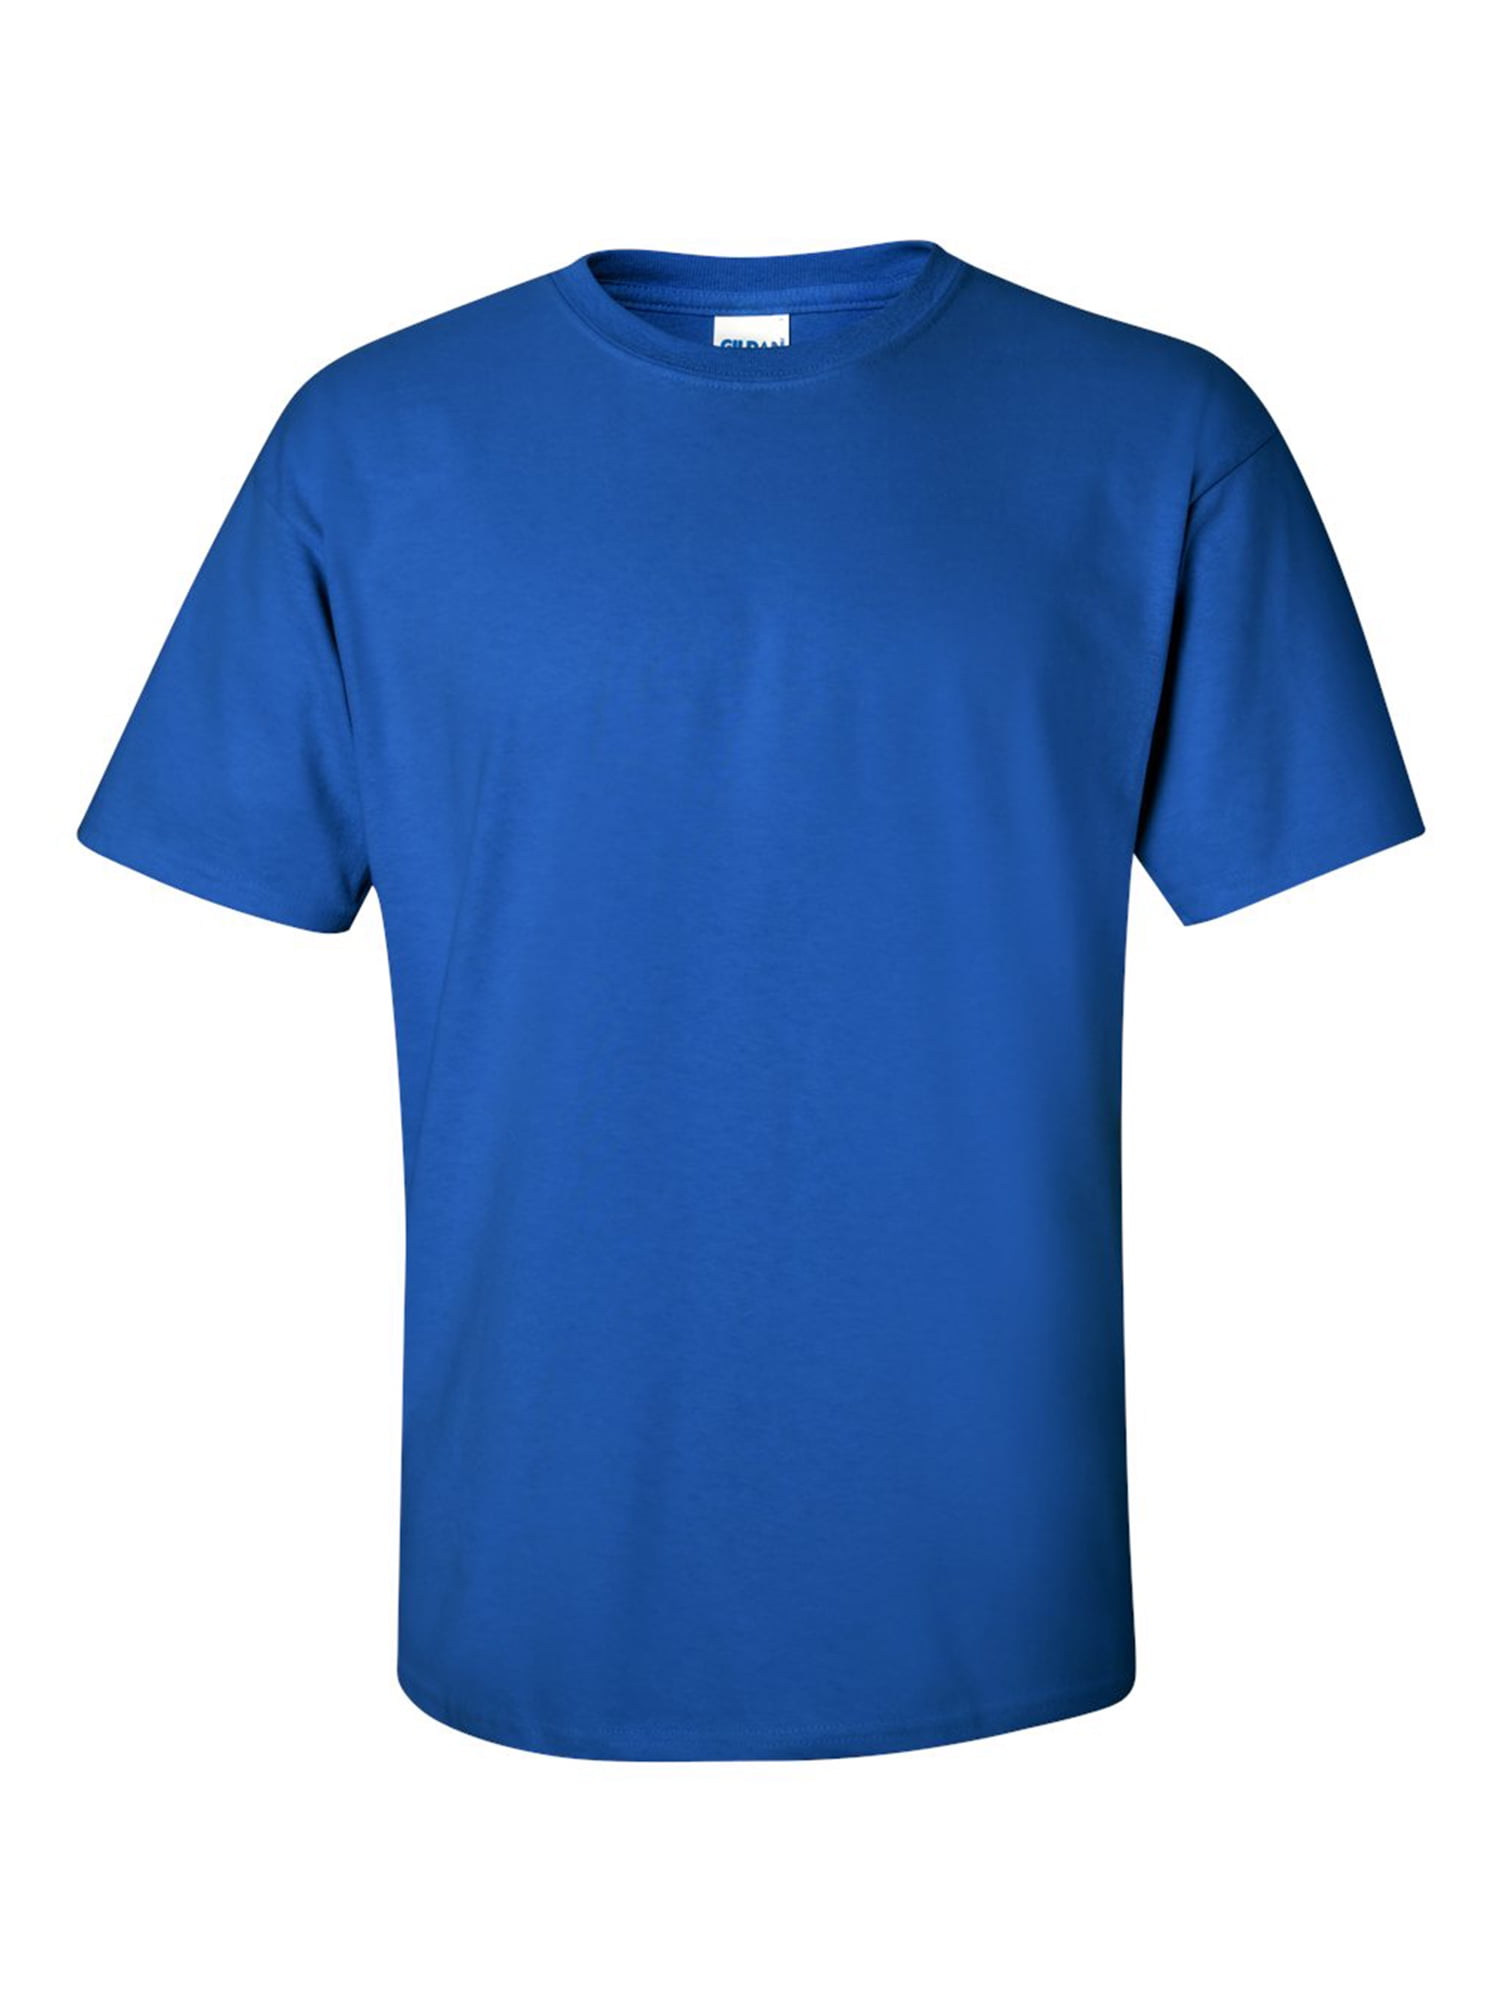 Royal Blue Shirt for Men - Gildan 2000 ...